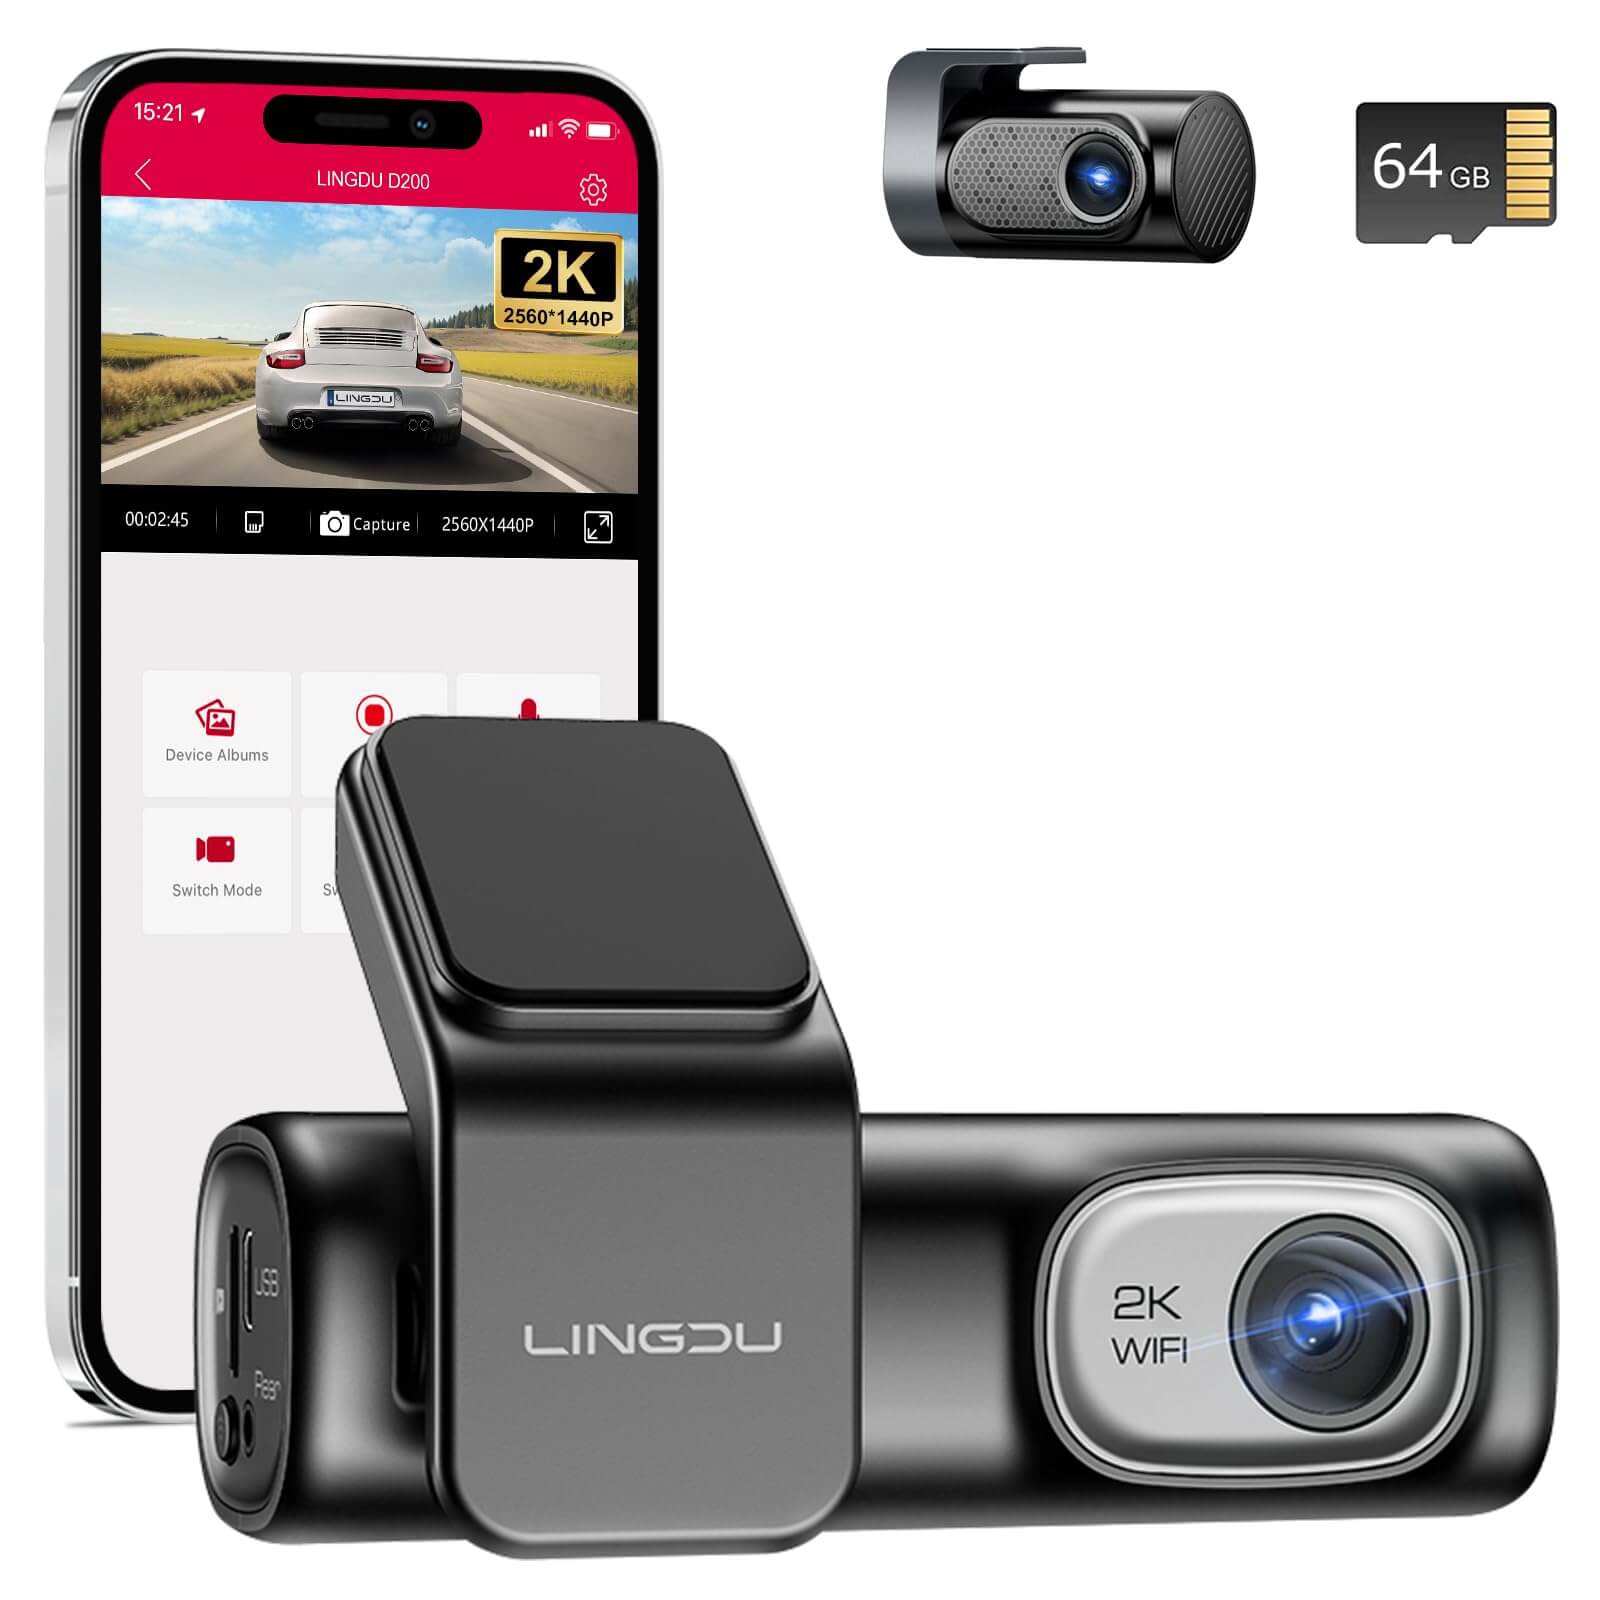 LINGDU D200 2CH Dash Cam 2K with 0.96" Screen Voice Control 24H Parking Mode